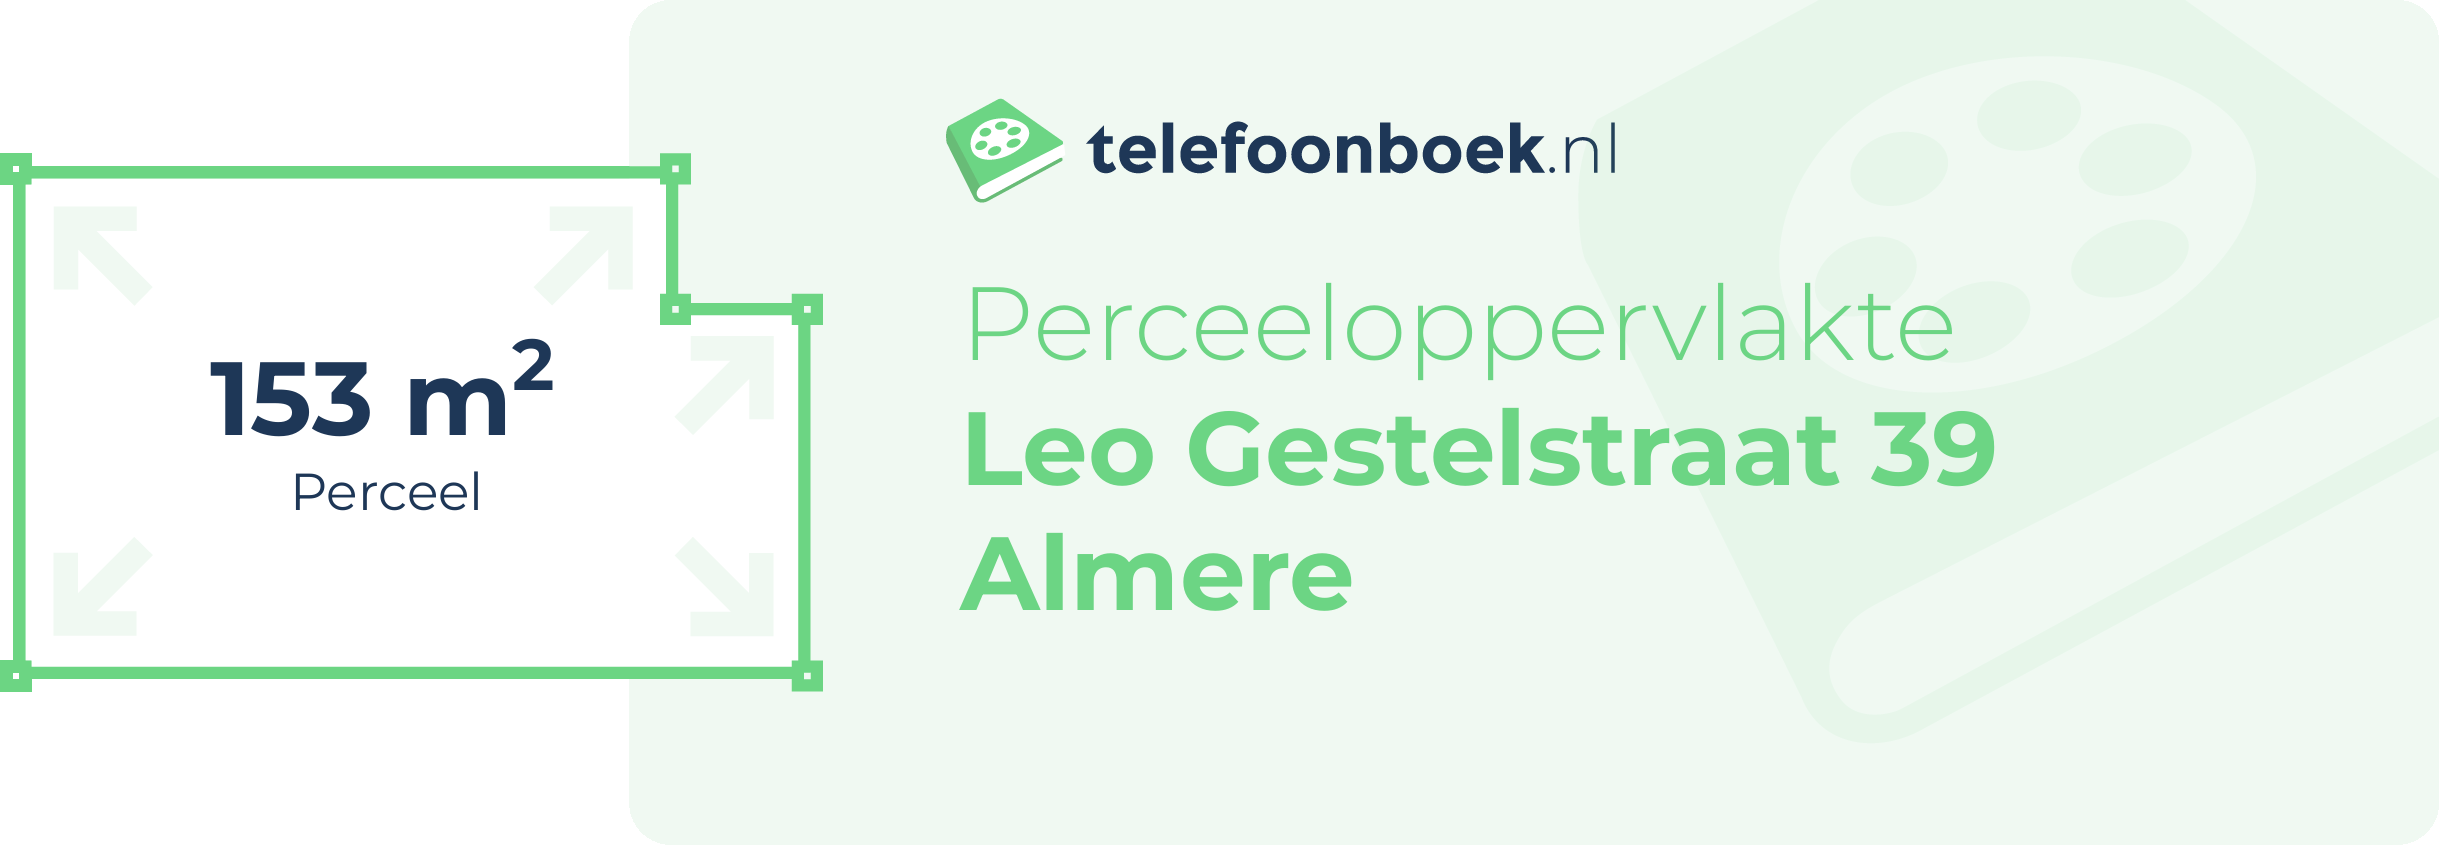 Perceeloppervlakte Leo Gestelstraat 39 Almere